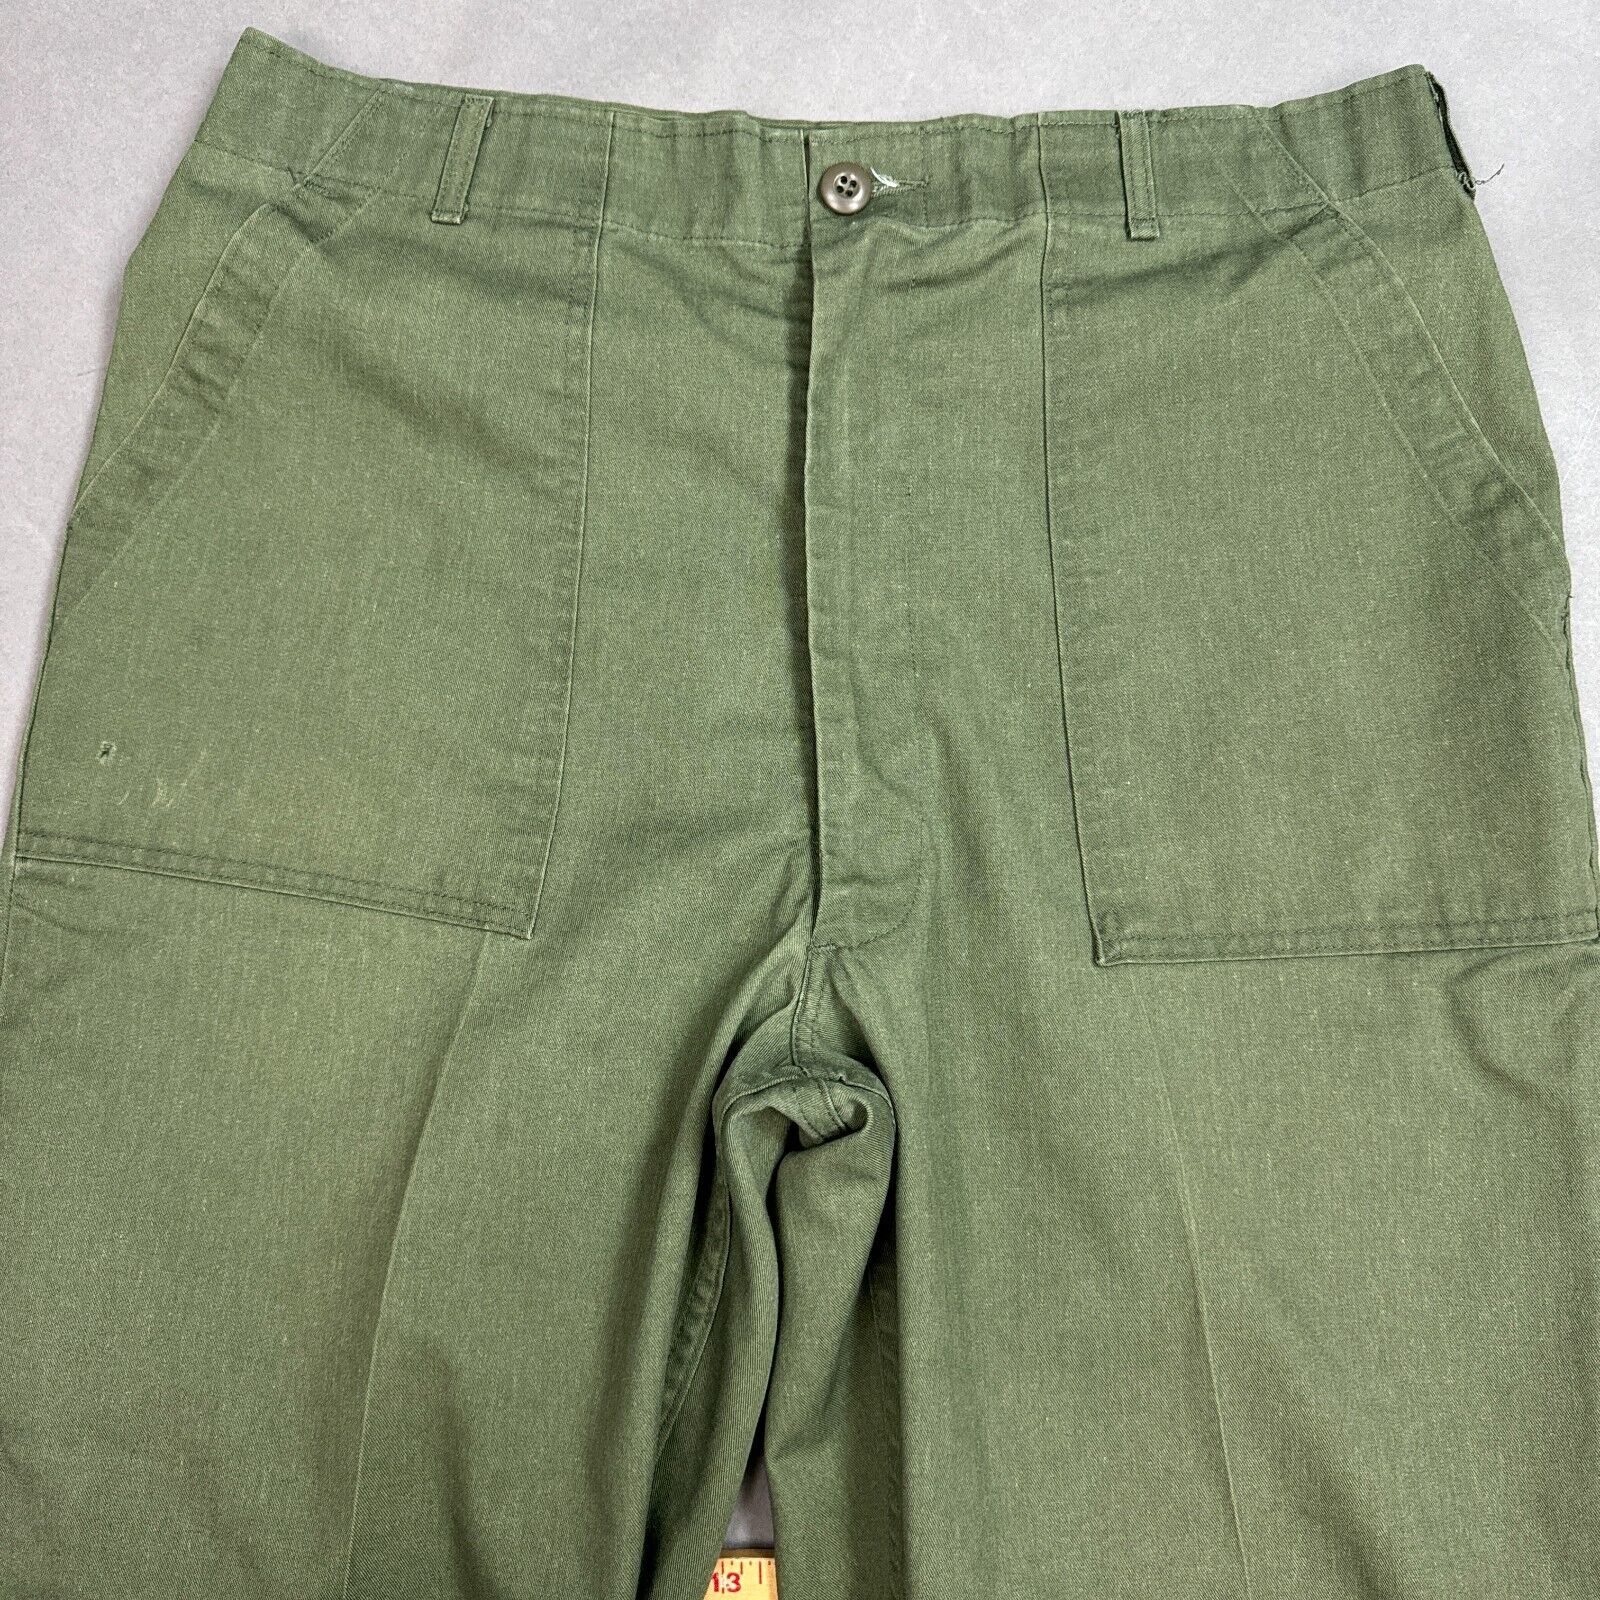 Vintage US Military Pants Mens 38x33 Green Trouser Utility OG 507 Inseam Altered